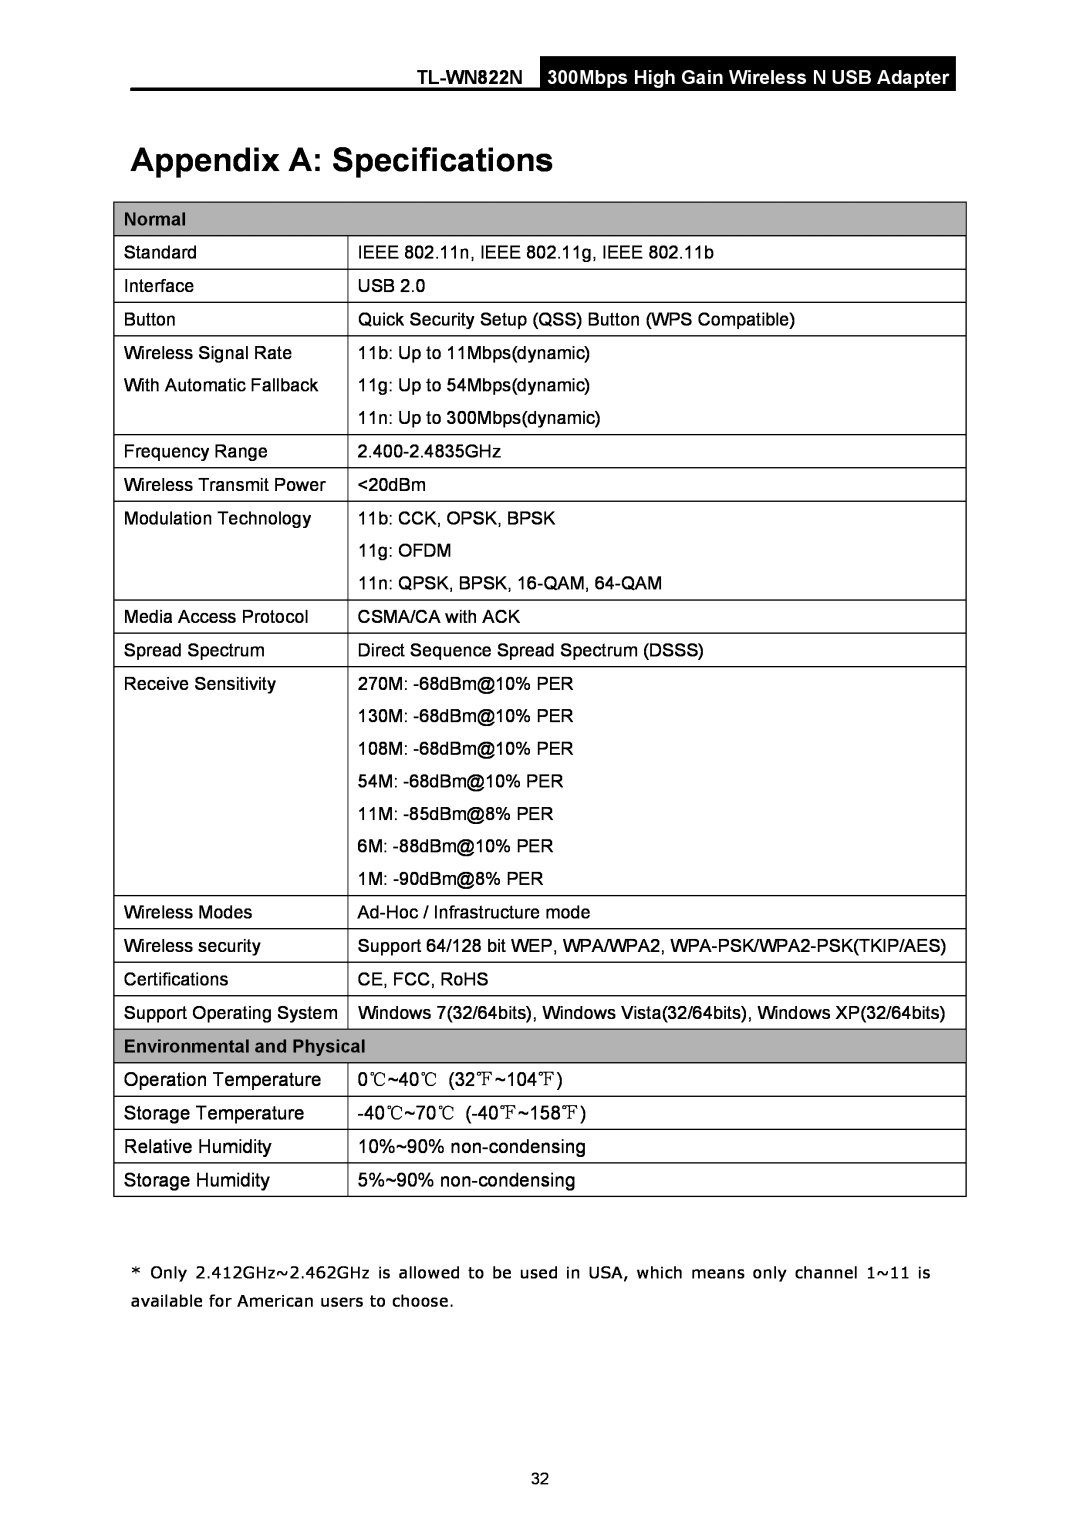 TP-Link TL-WN822N manual Appendix A Specifications, Operation Temperature, 0~40 32~104, Storage Temperature, 40~70 -40~158 